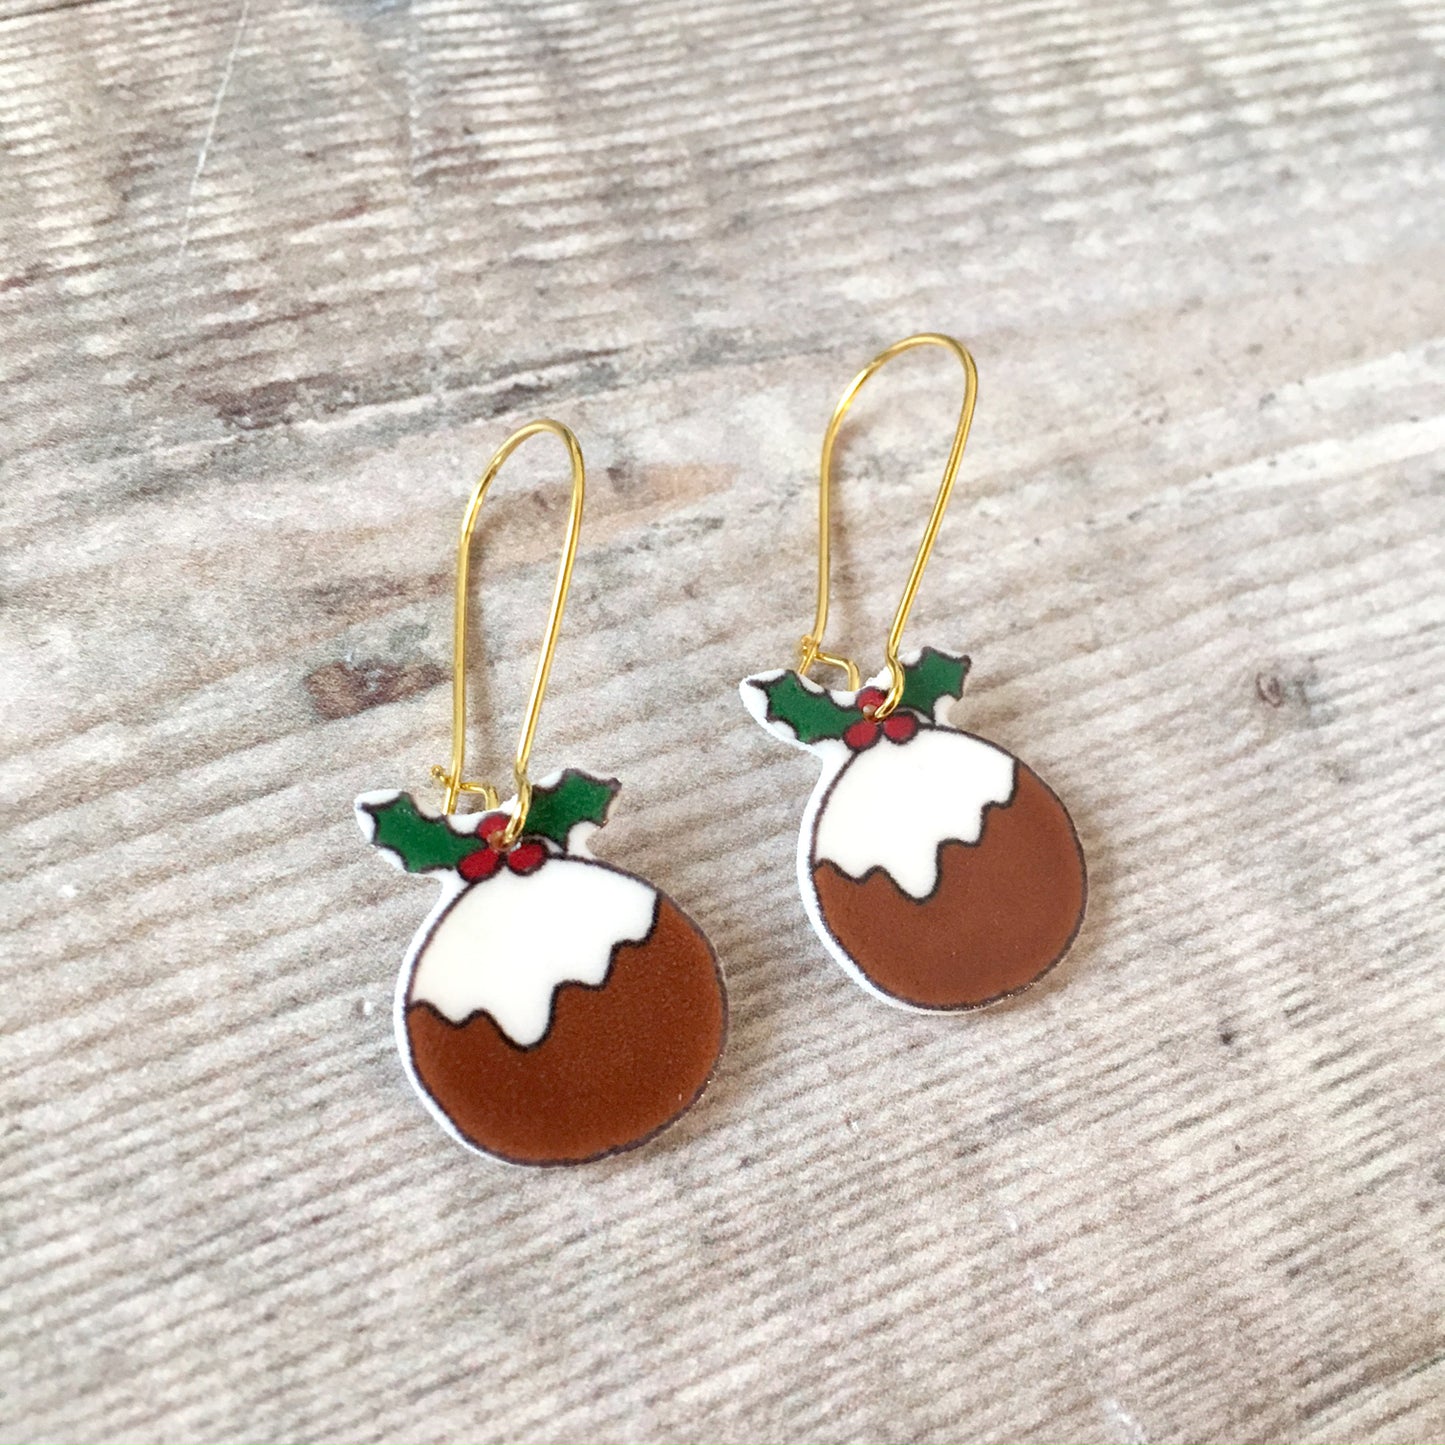 Christmas pudding novelty holiday earrings